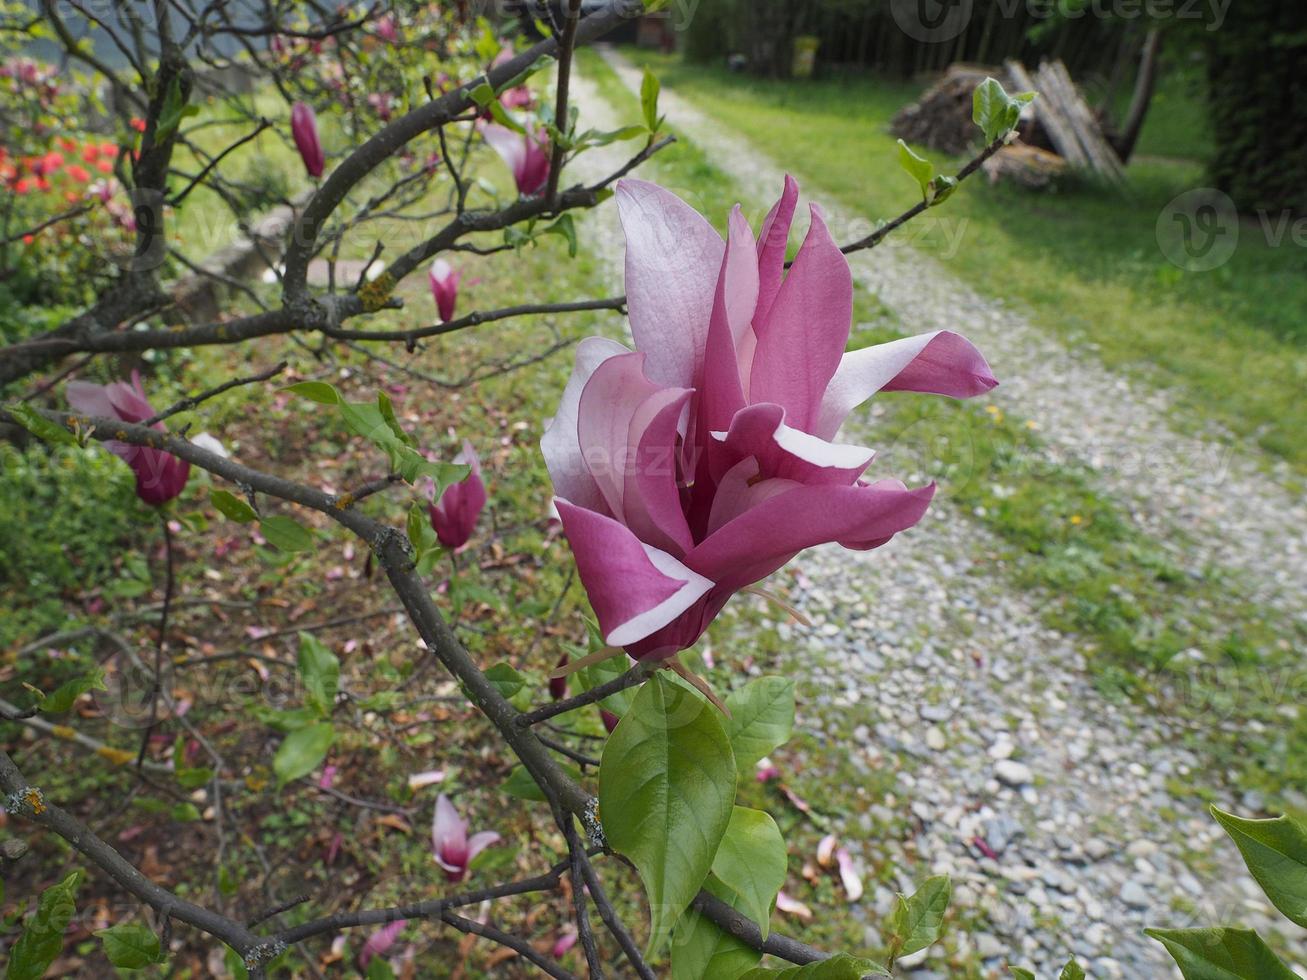 magnoliaboom bloem foto